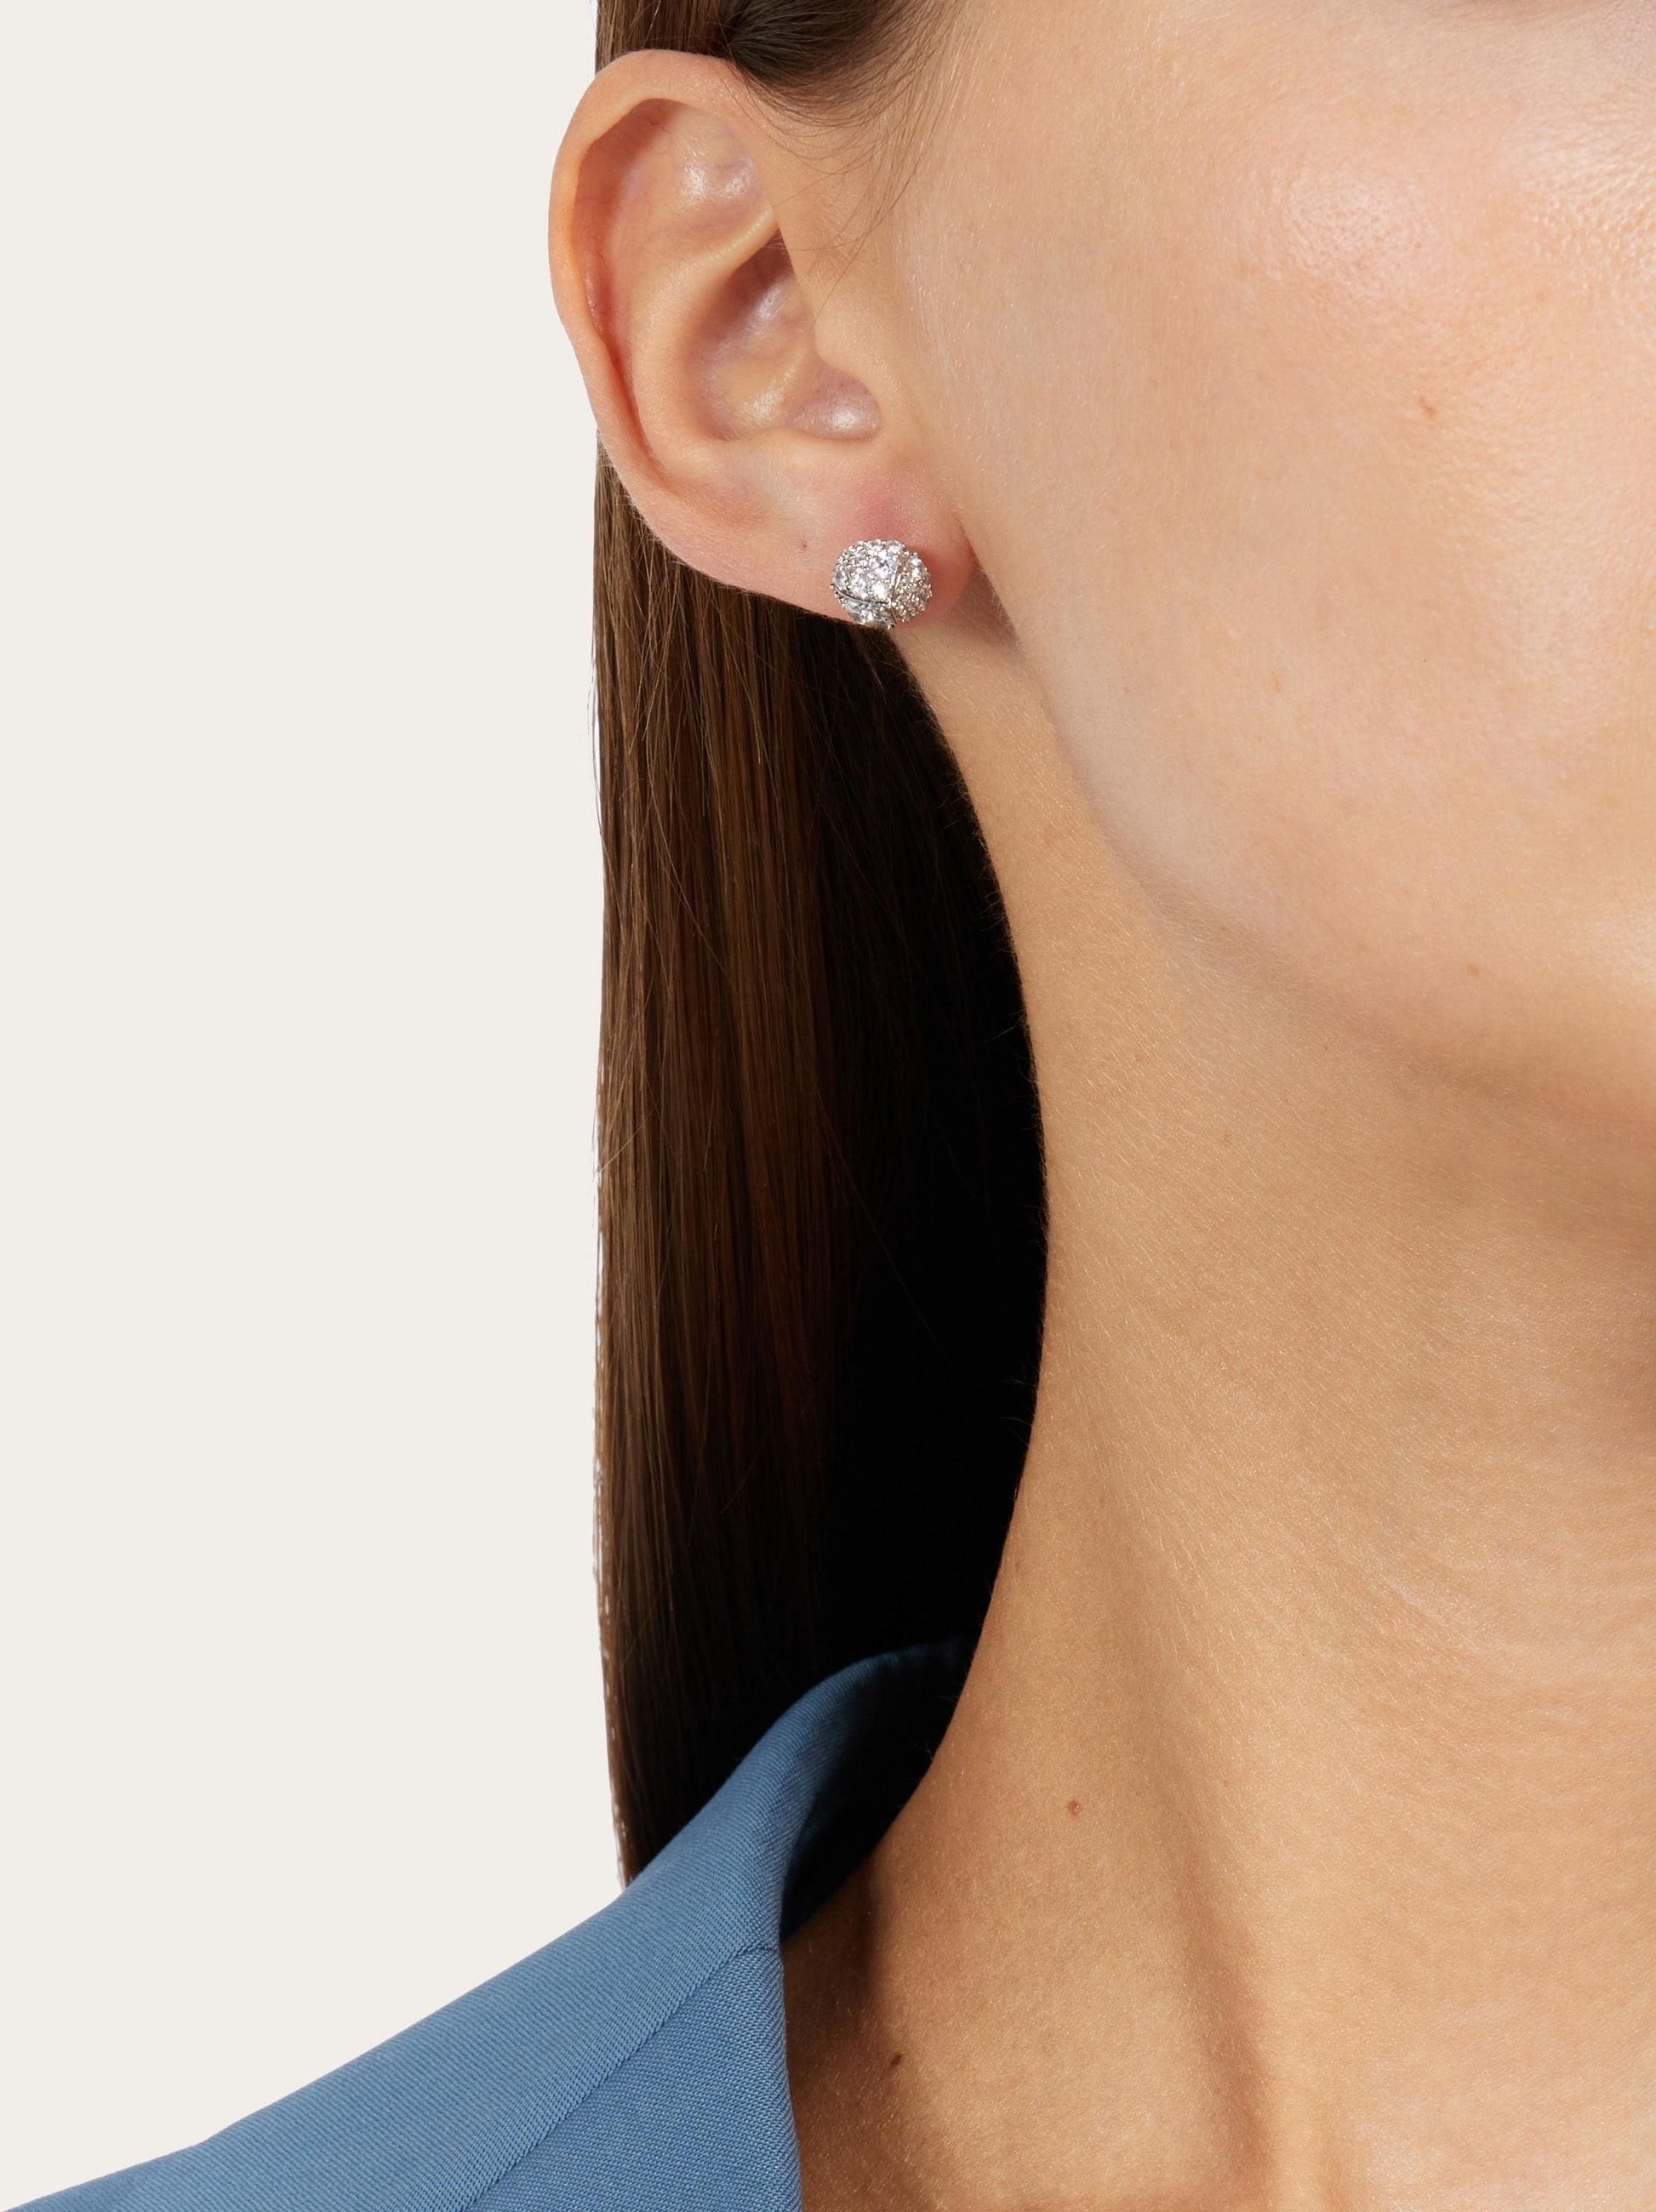 Pine cone earrings with rhinestones (S) - 4